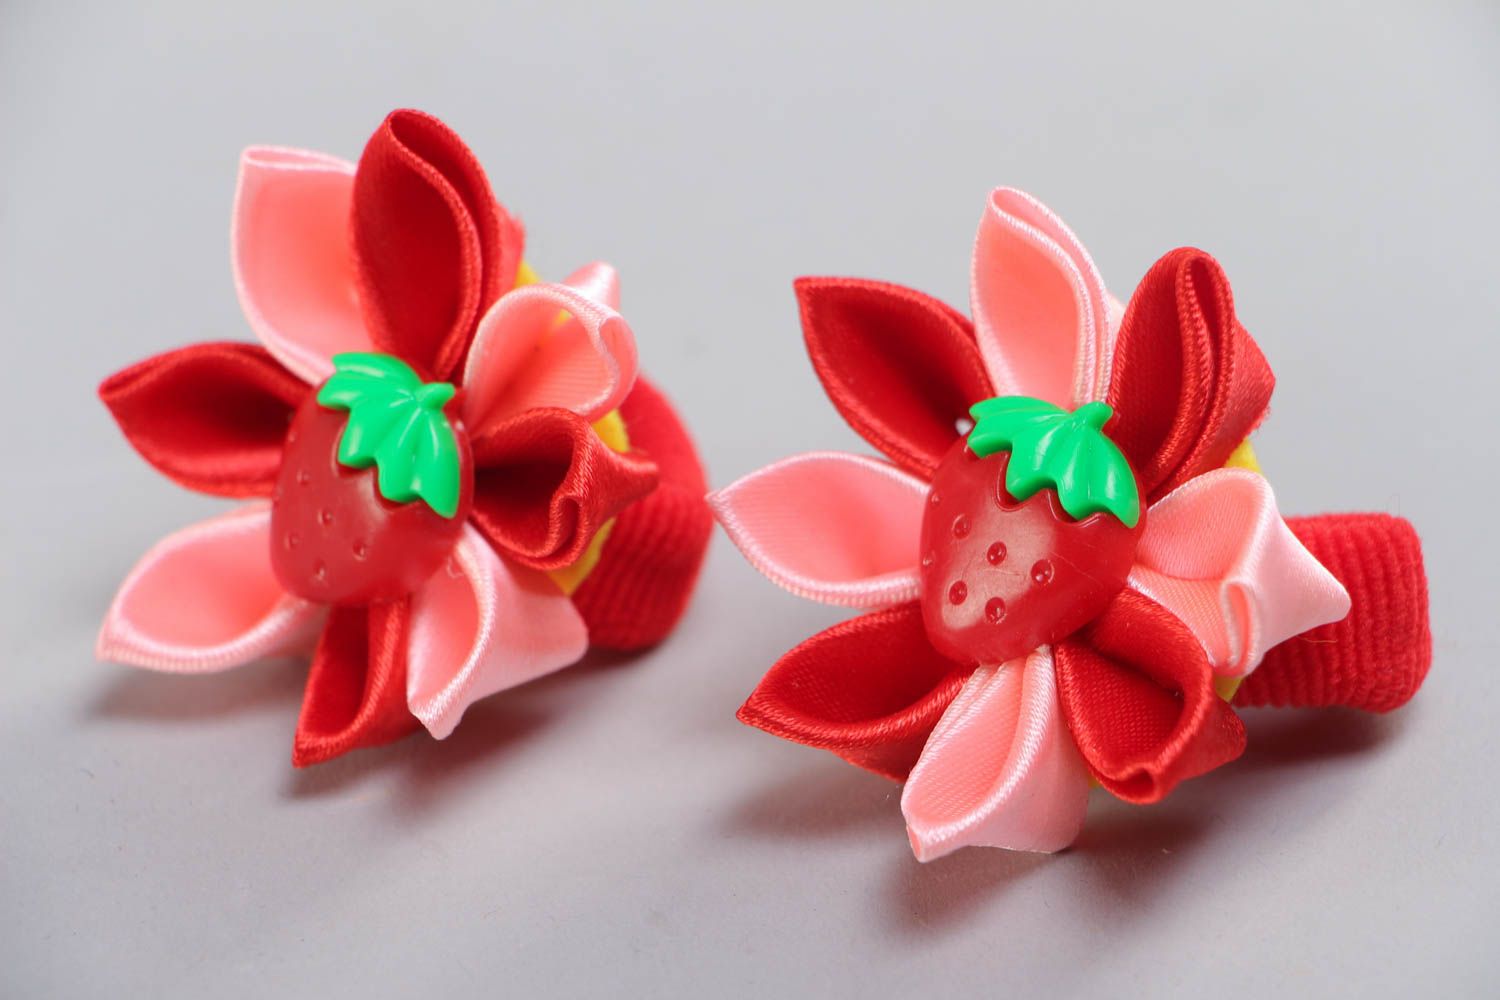 Handmade festive hair ties with red satin ribbon kanzashi flowers set of 2 items photo 2